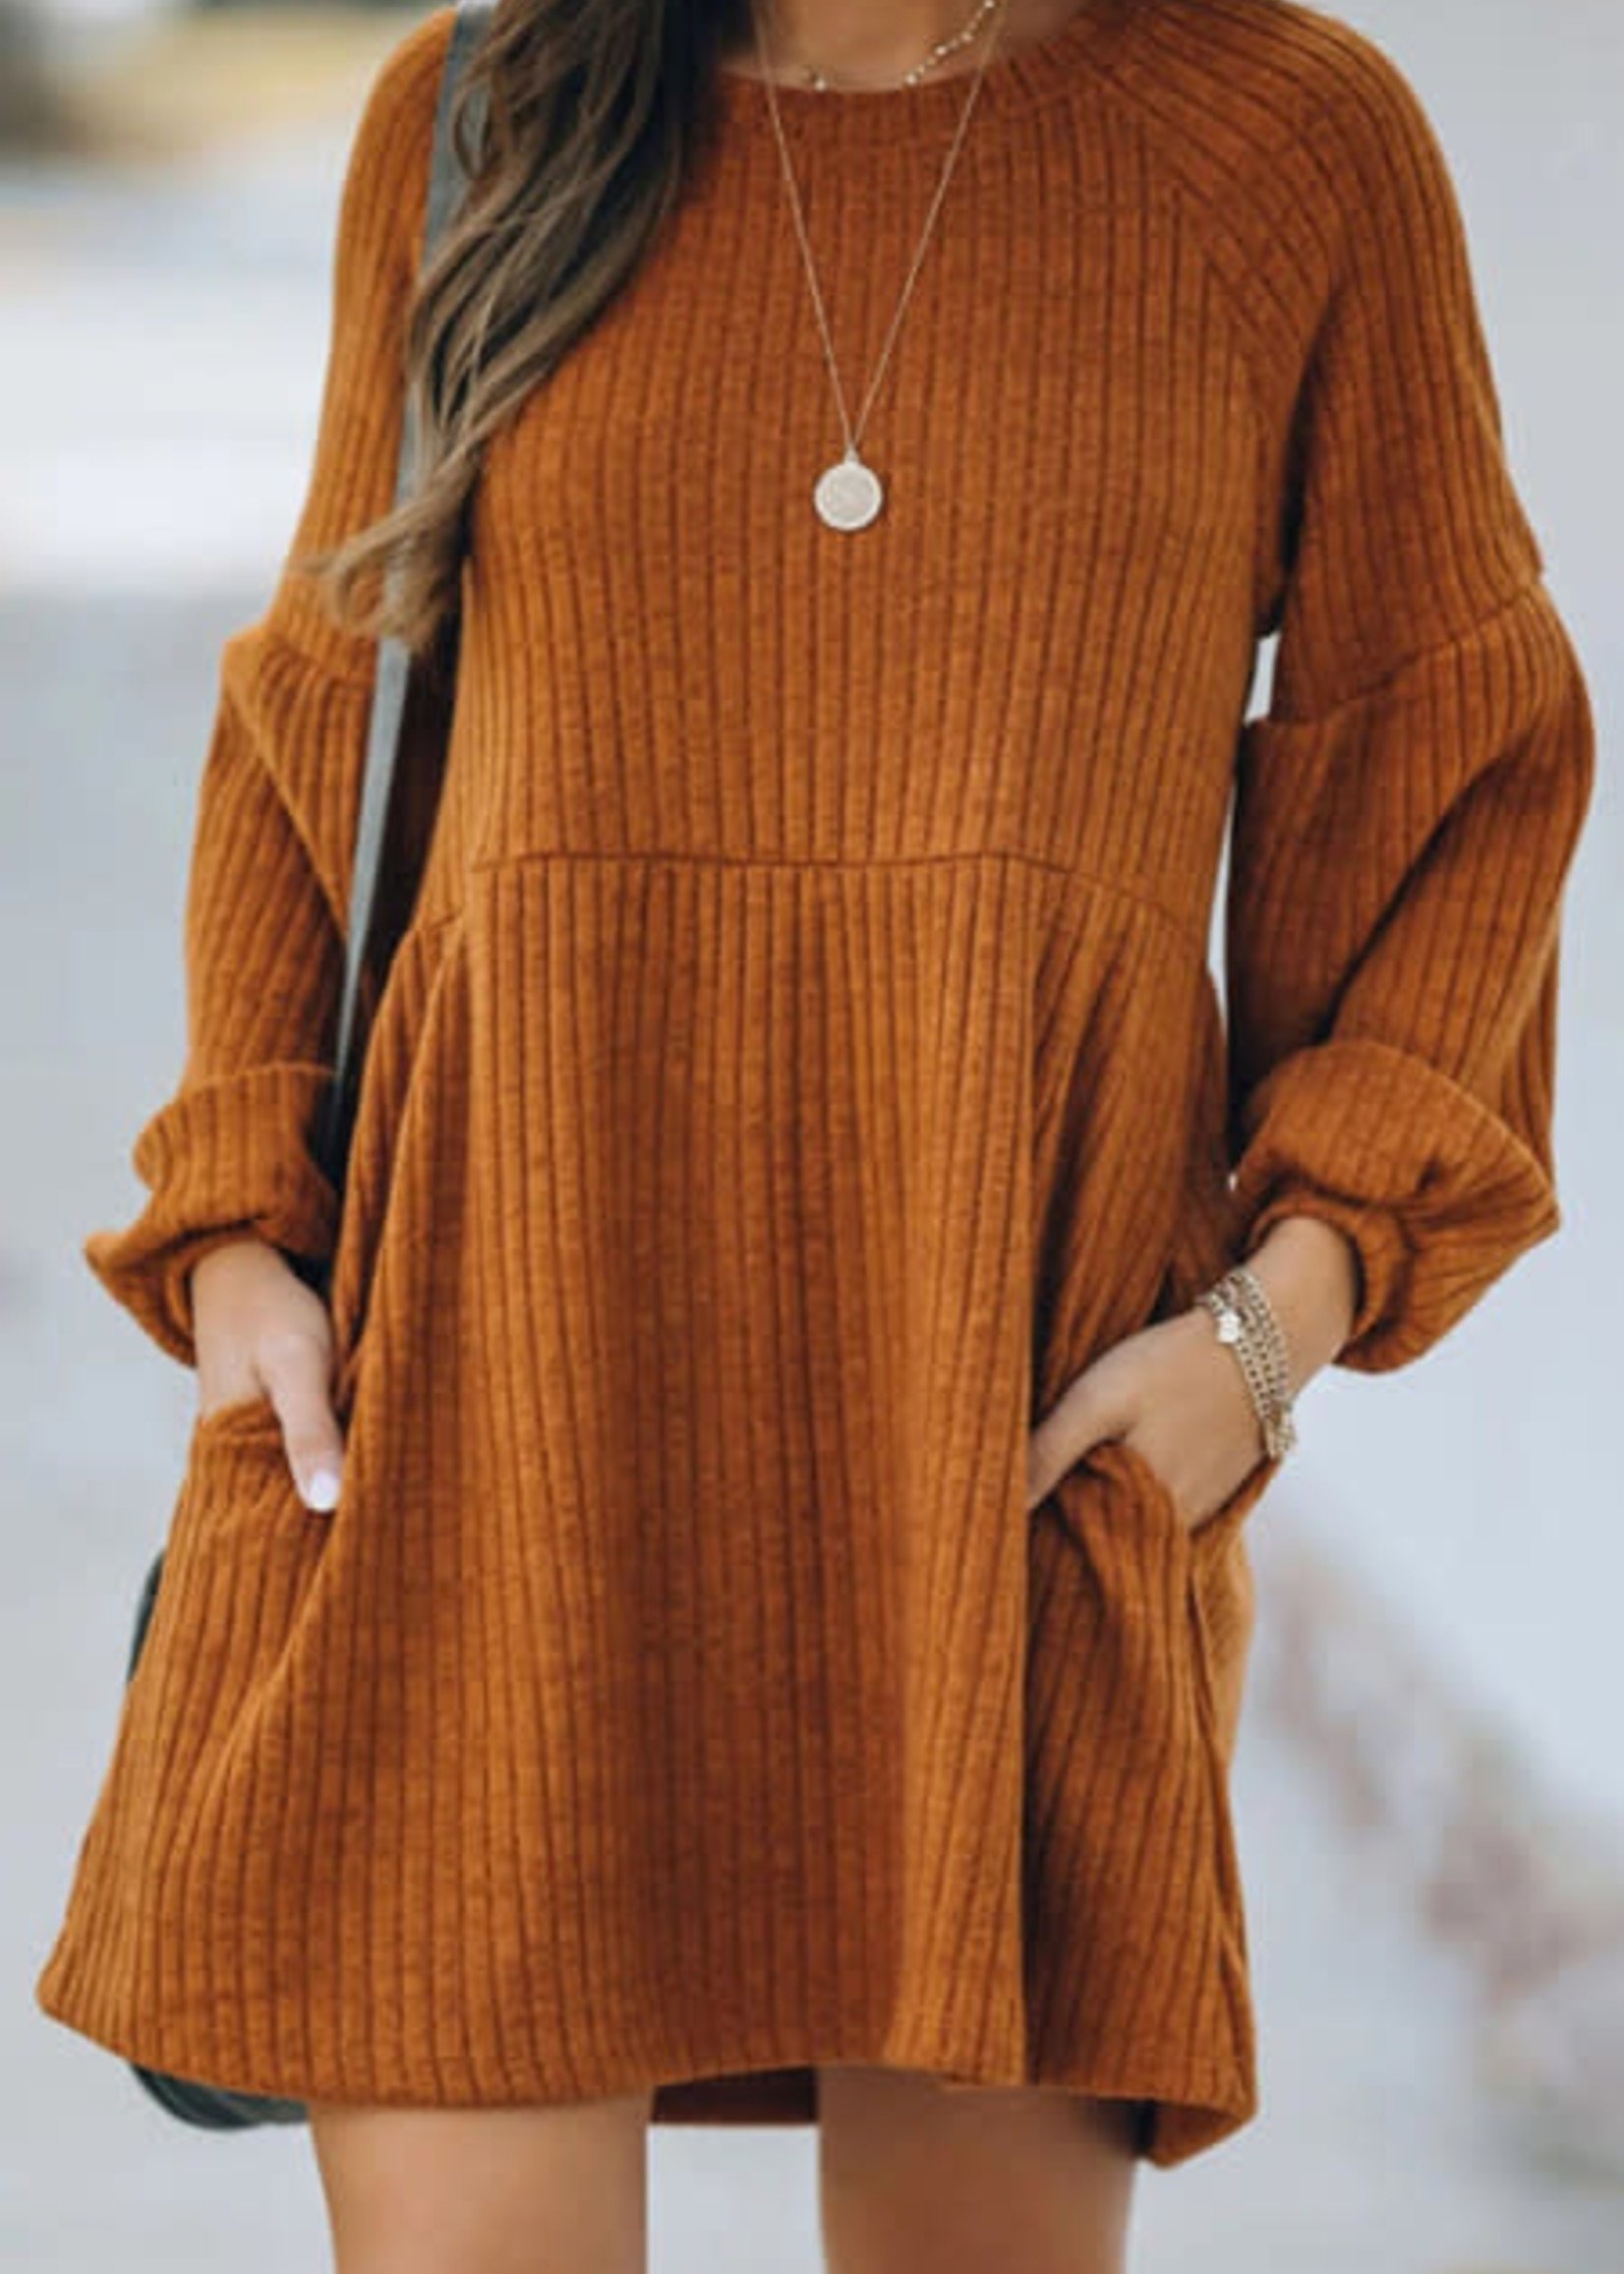 Org/Brn knit dress